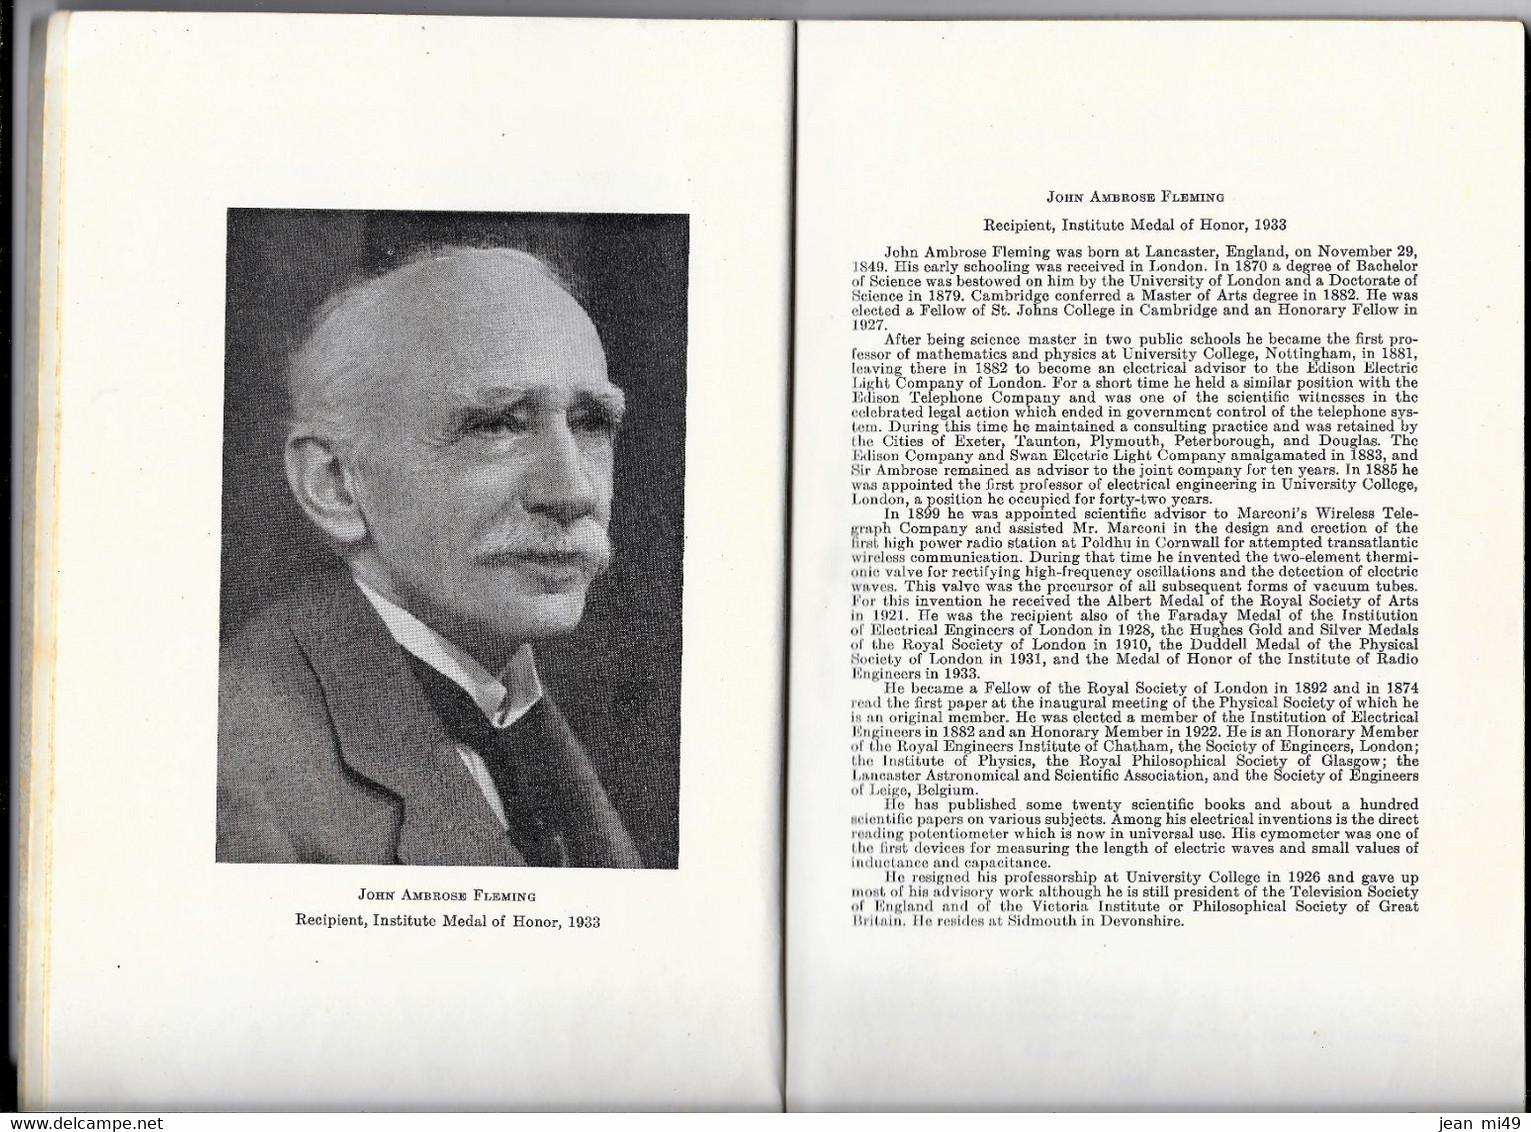 LIVRE -  PROCEEDINGS OF THE INSTITUDE OF RADIO ENGINEERS - Volume 22 - November 1934 - Number 11 - Published New York - Ingenieurswissenschaften